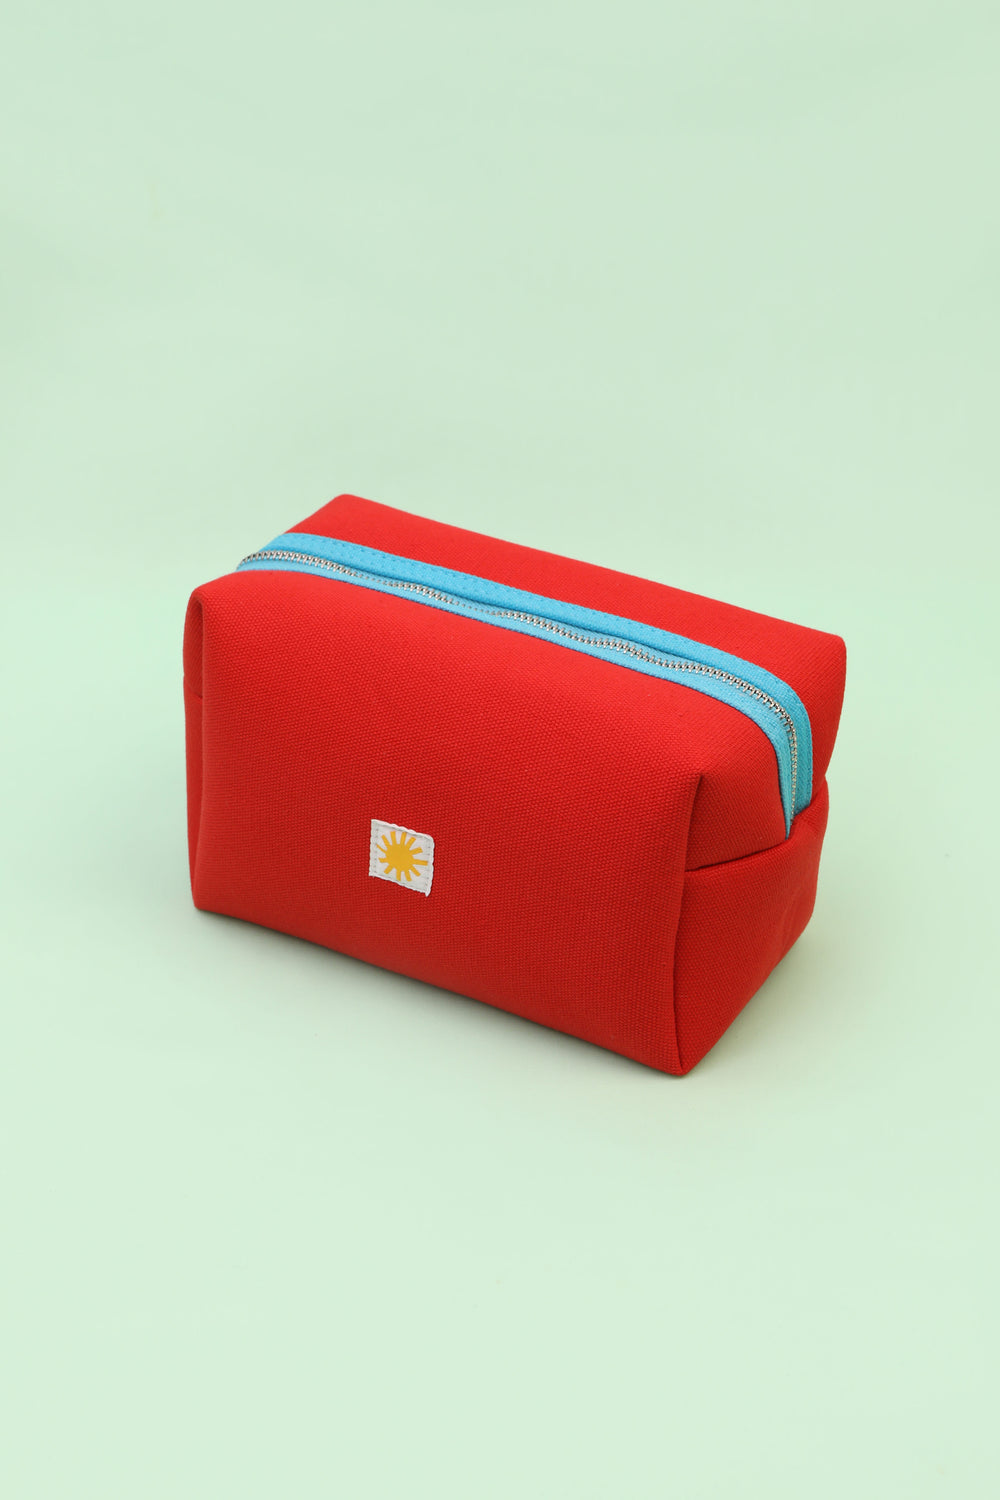 L.F Markey Red/Blue Toiletries Bag